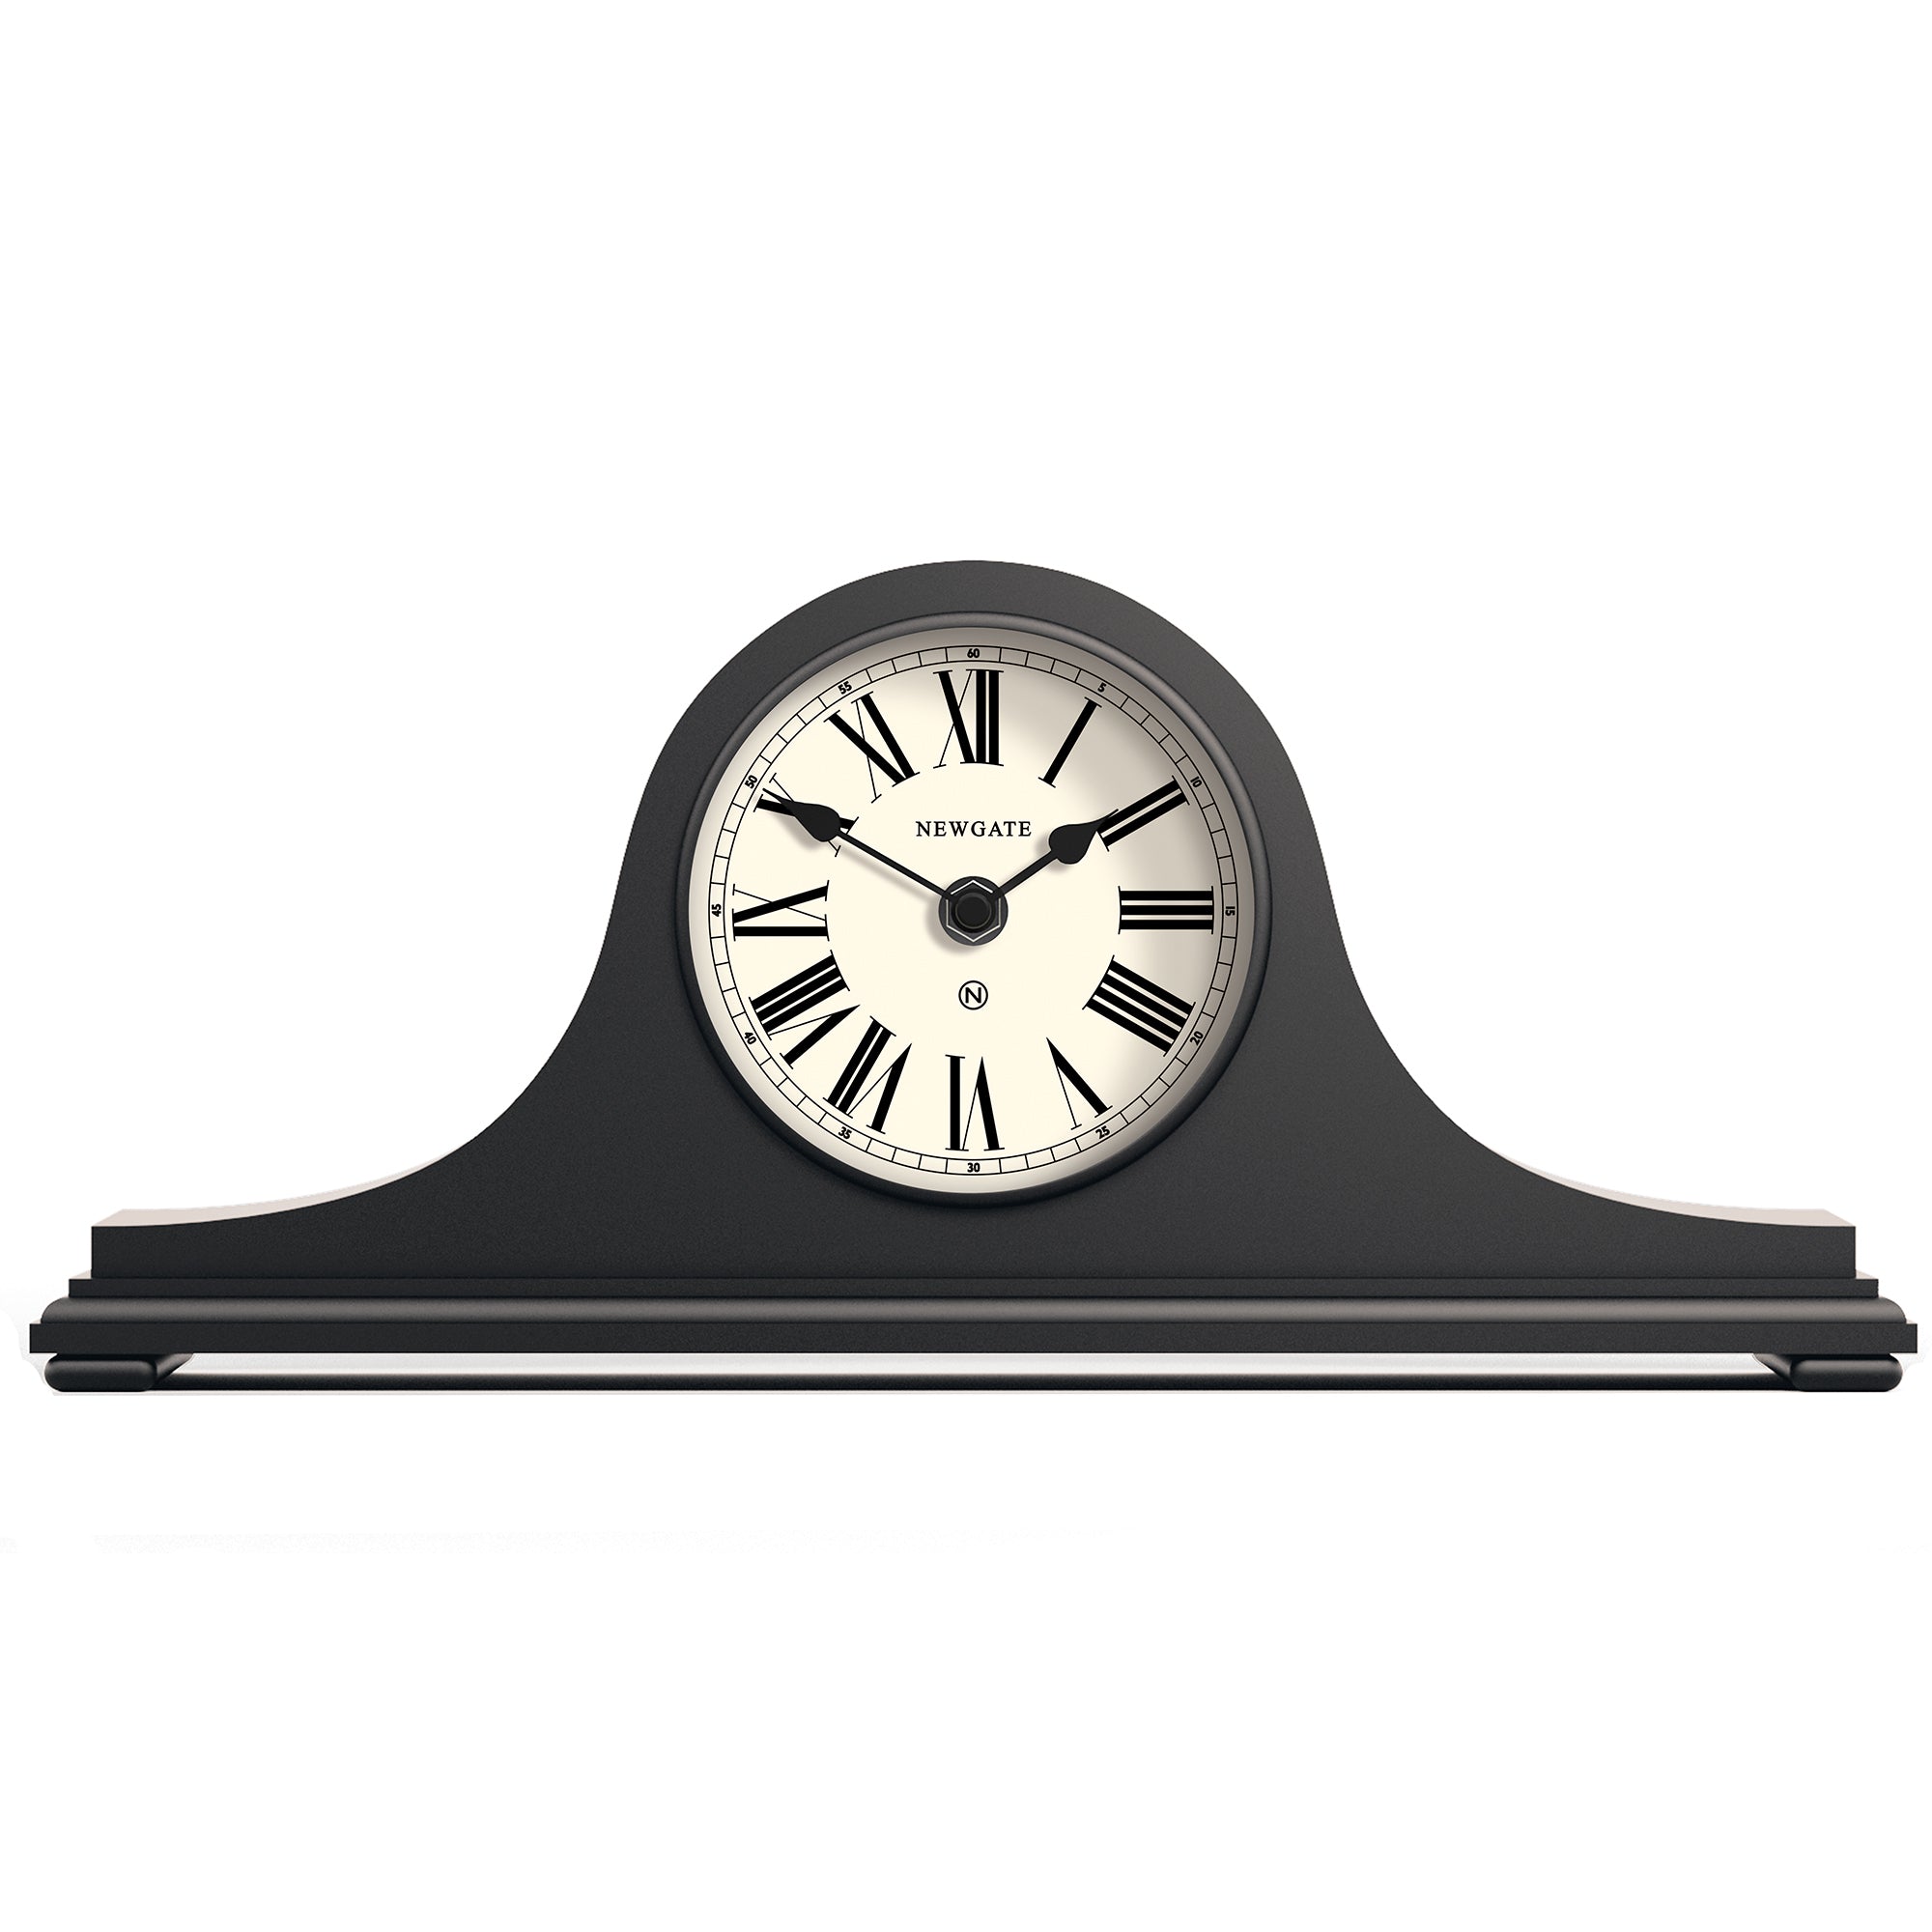 Time machine mantel clock